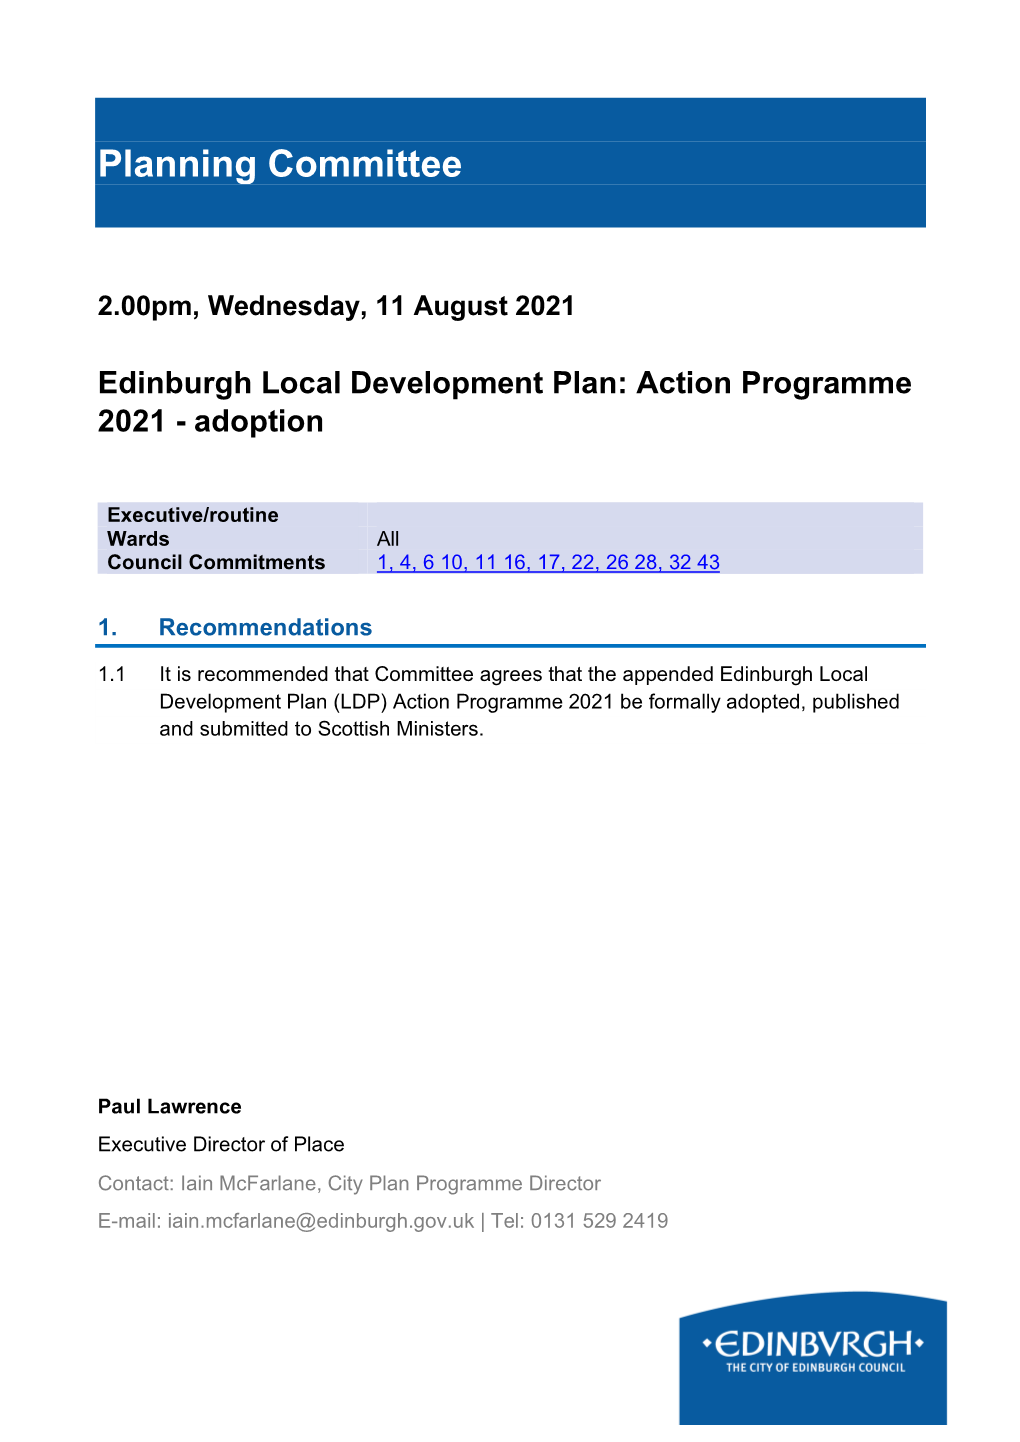 Edinburgh Local Development Plan: Action Programme 2021 - Adoption